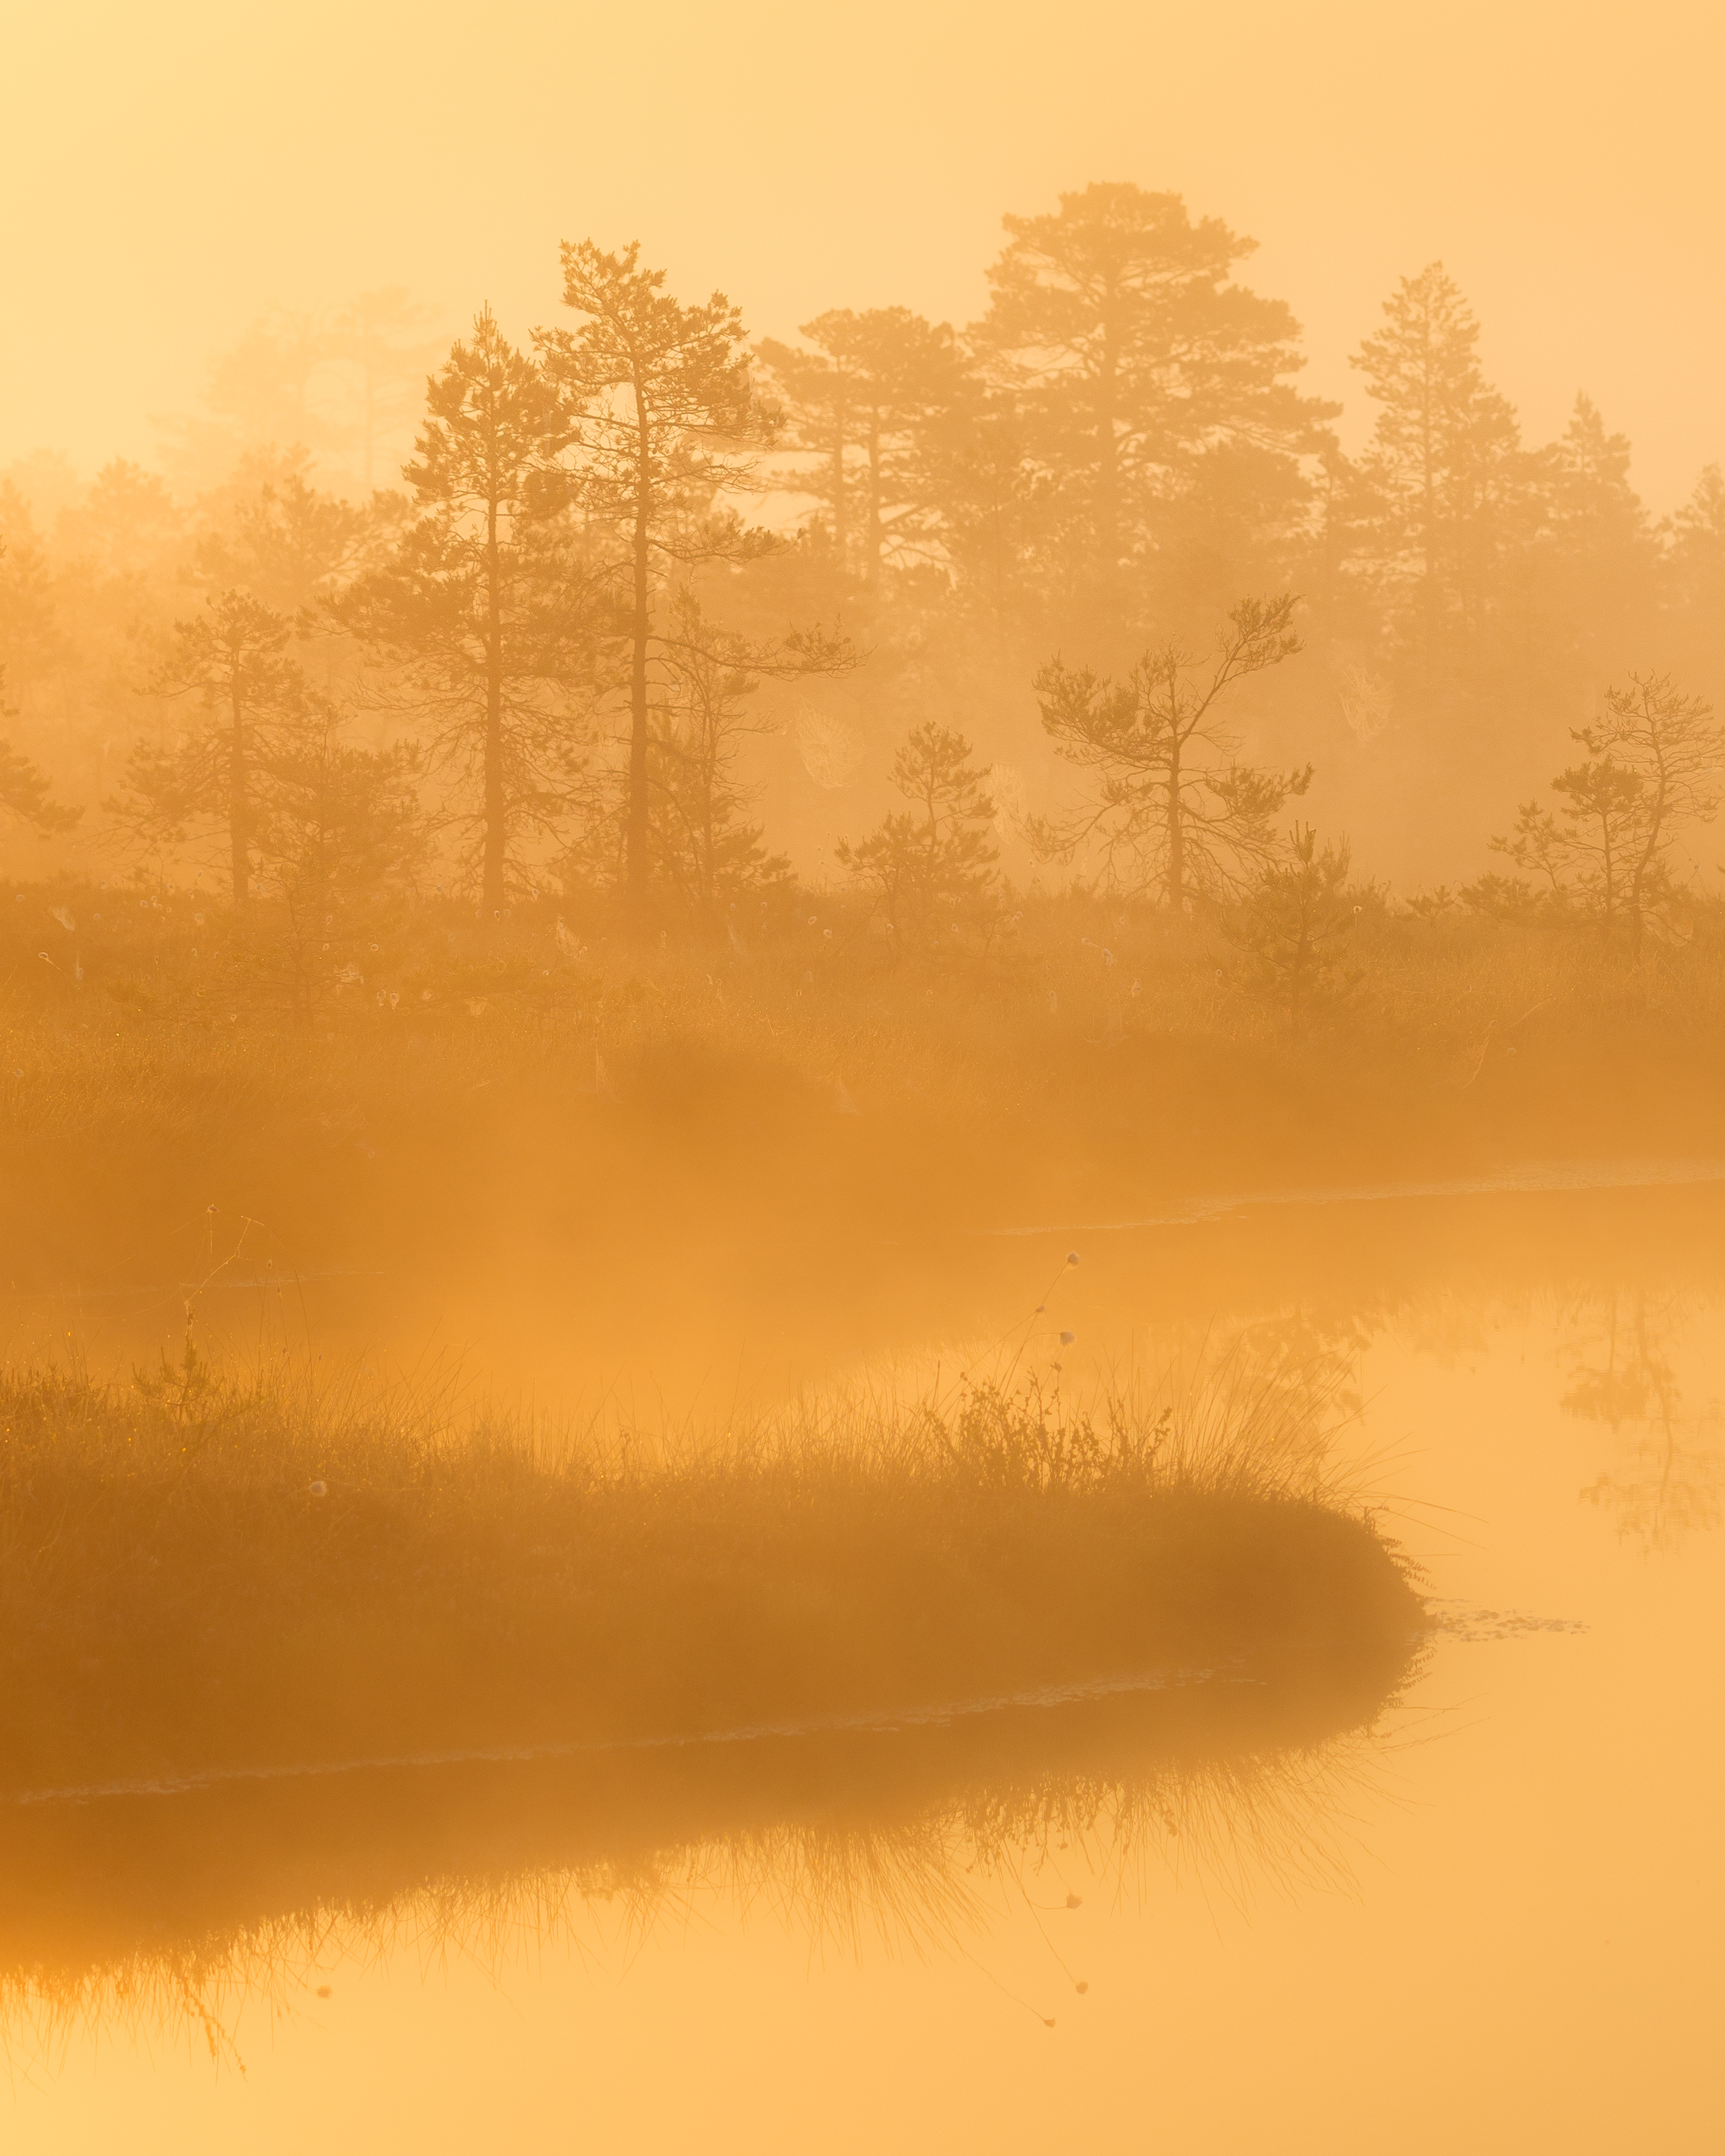 #estonia, #estoniabogs, #nature_of_estonia, #naturephotography, #naturelovers, #sunrise_sunset_photogroup, #sunriseoftheday, #foggymorning, #foggy, #goldenlight, #goldensunrise, #bog, #bogsofestonia, #kõnnusuursoo, #hikingtrails, #goldenhour, #goldengram,, Nikolai Mordan